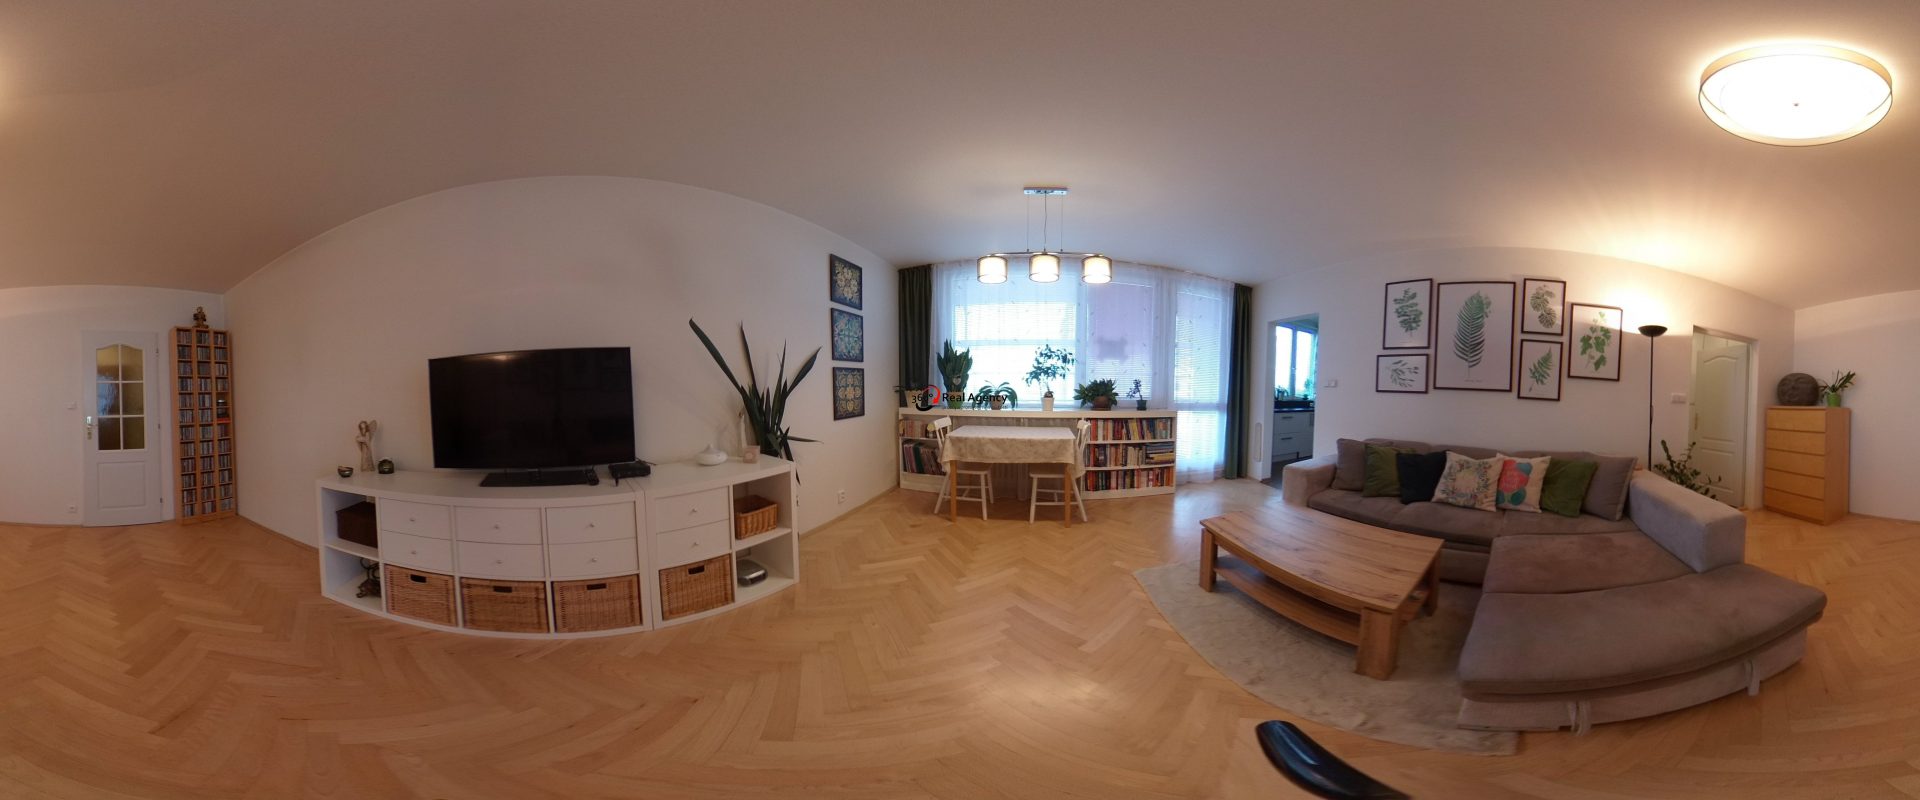 Pronájem bytu 3+1 80 m²/Lodžie, Hlubočepy.